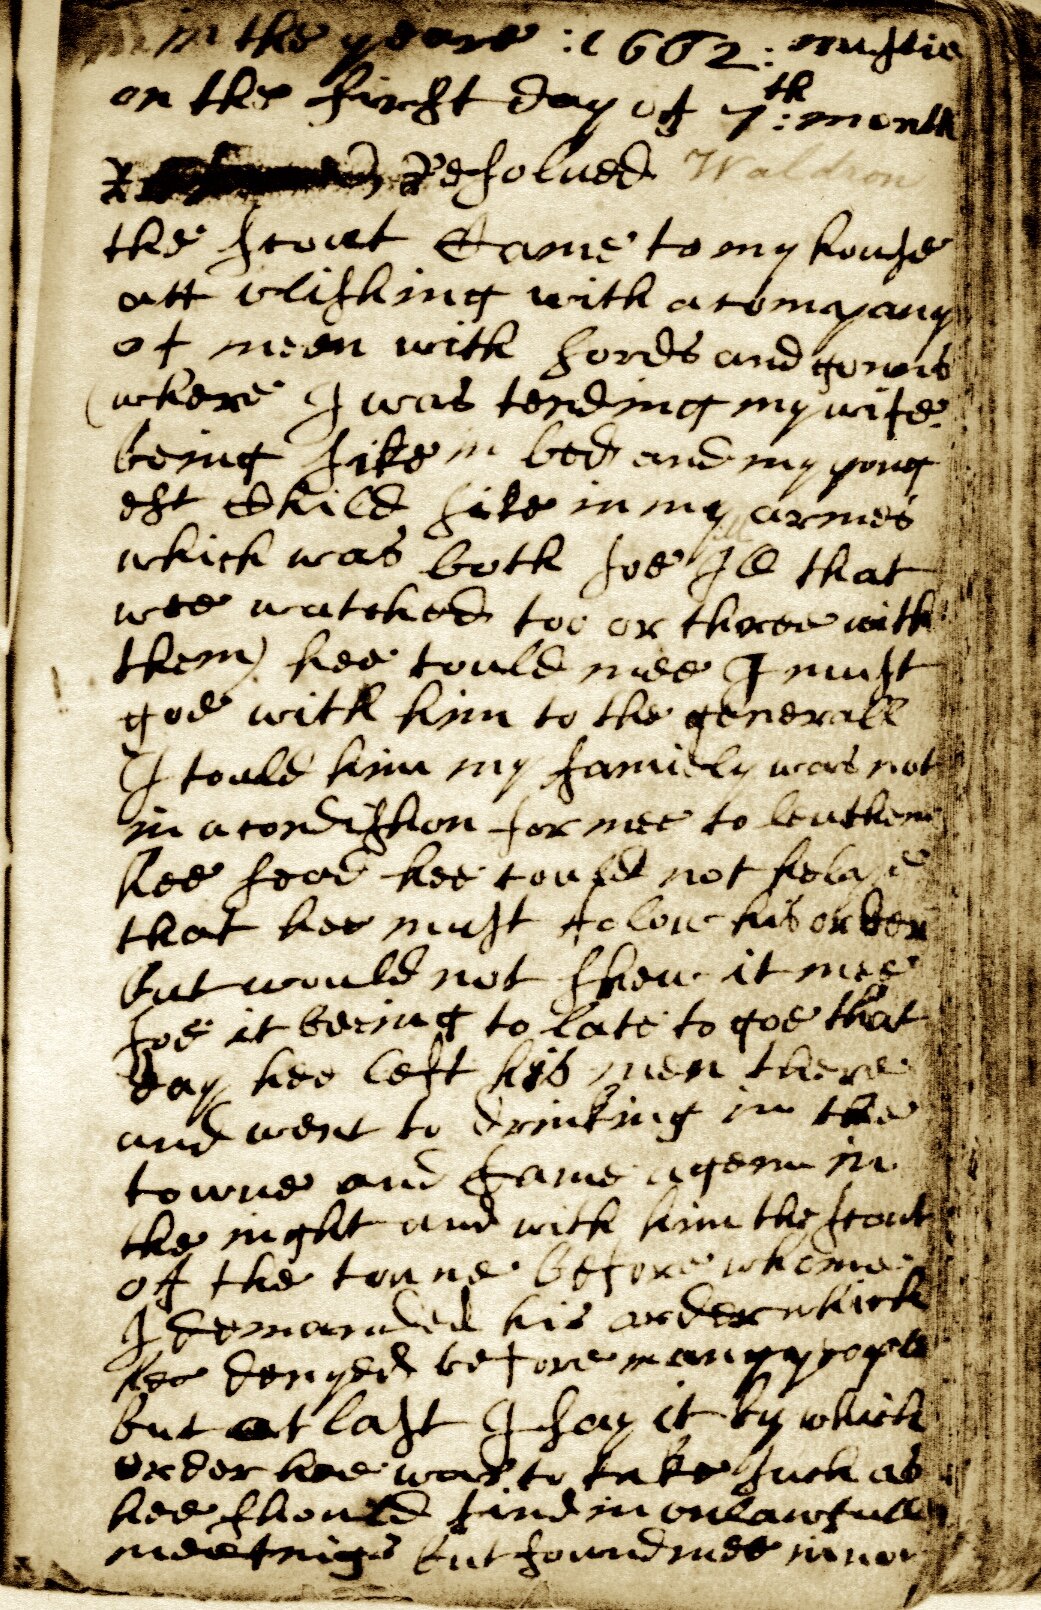 John Bowne's Journal, Folio 49